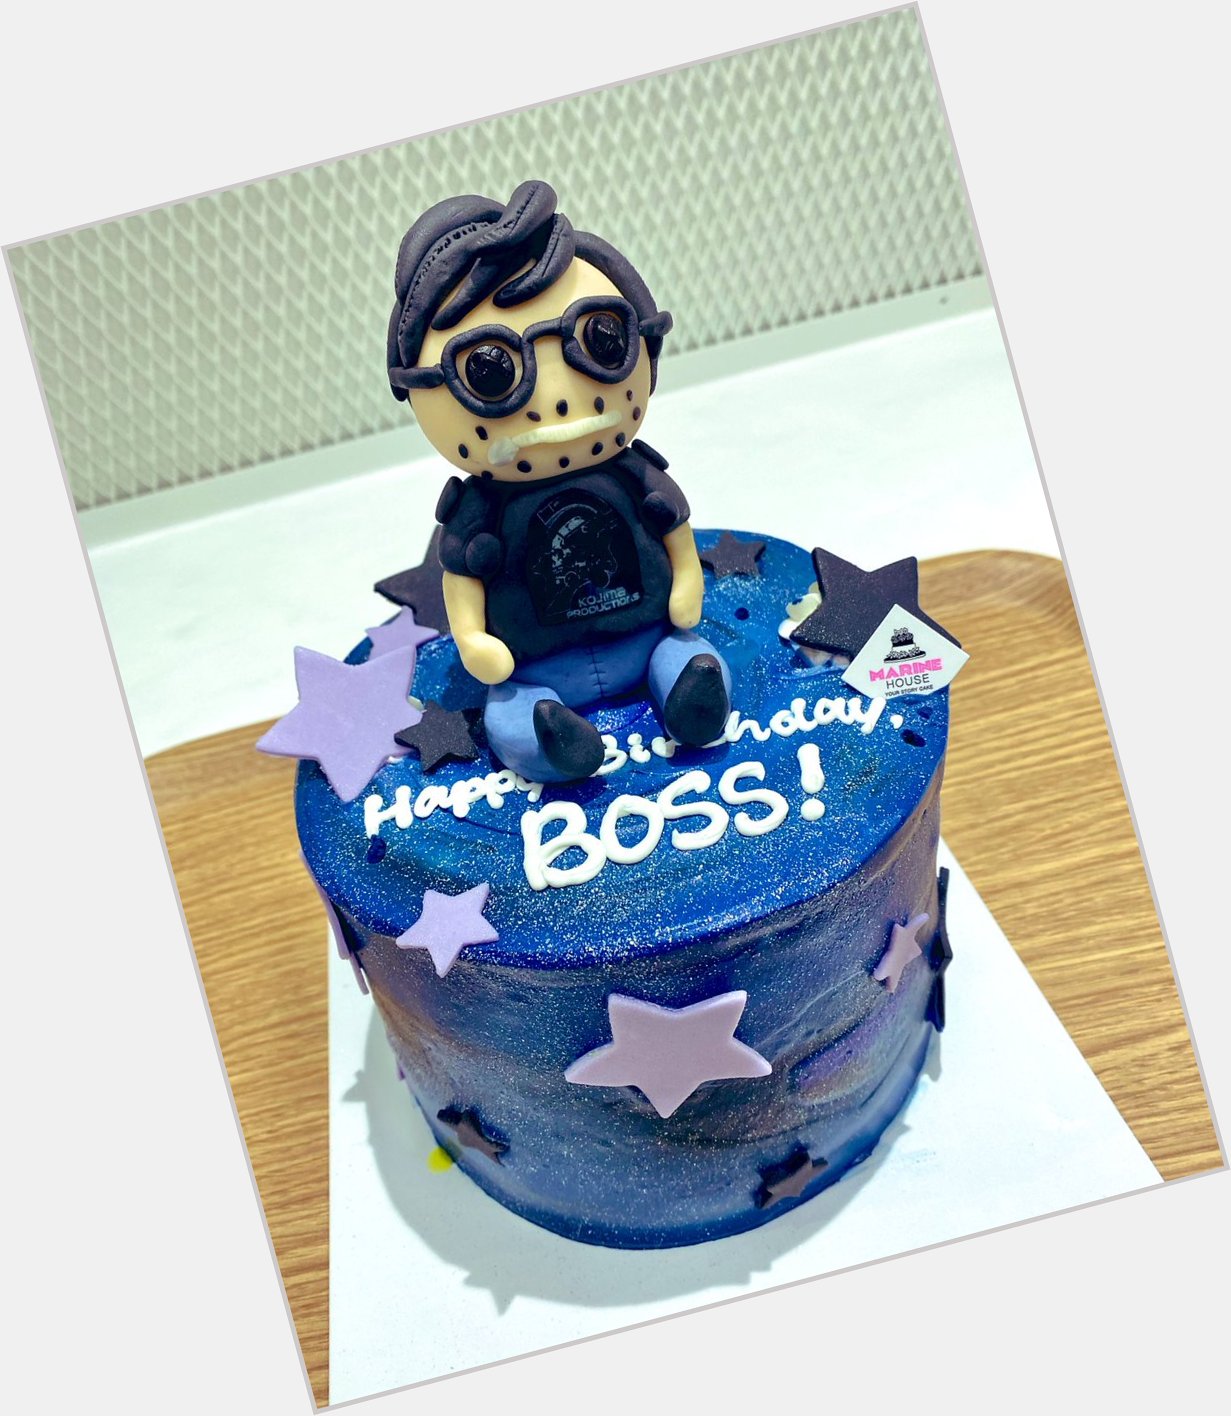 Hideo Kojima today Happy birthday BOSS 